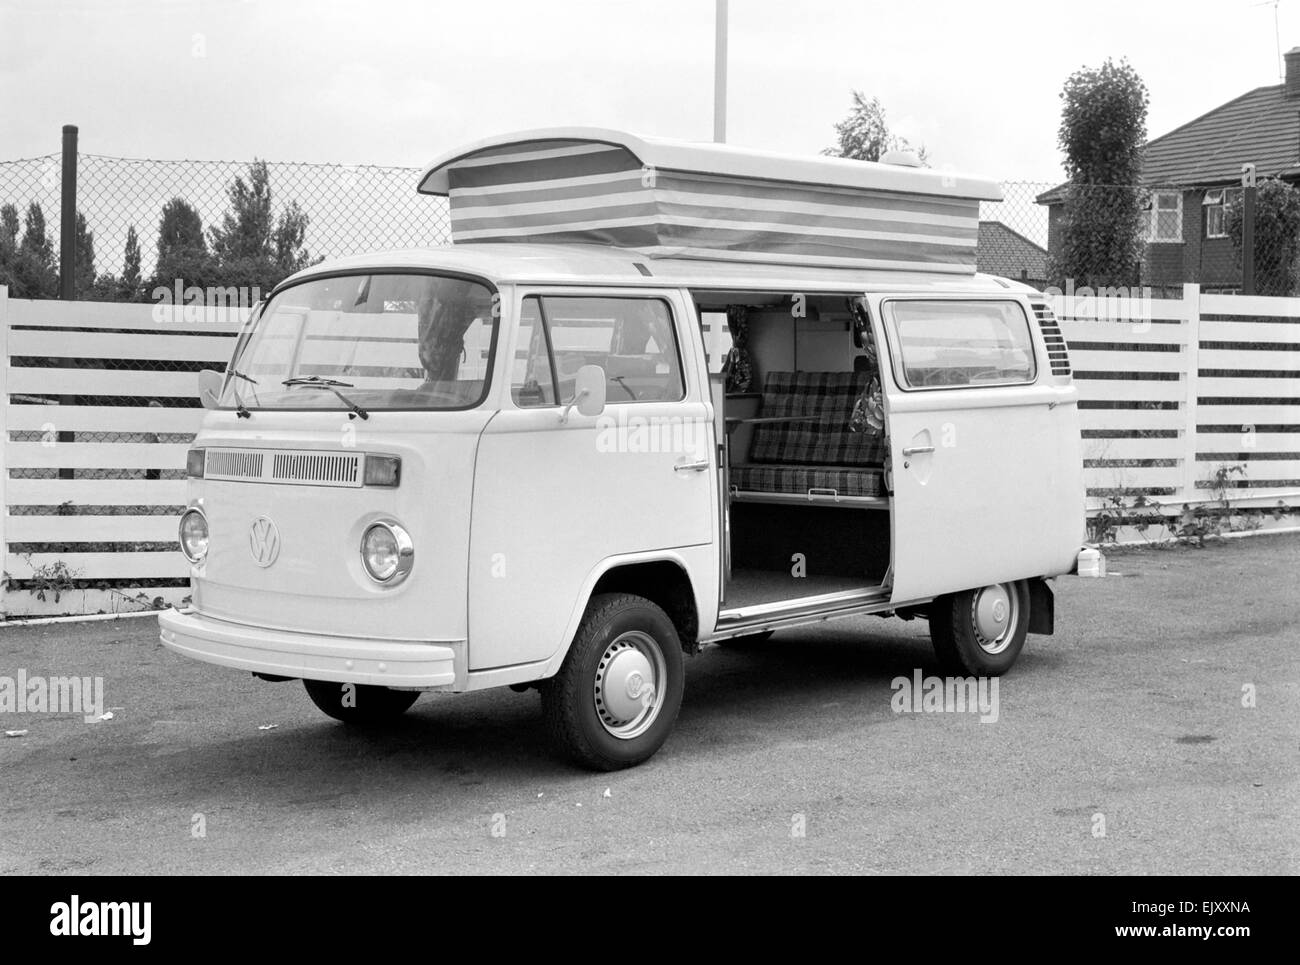 Volkswagen Devon Moonraker autocaravan. Agosto 1978 78-3944-006.Caption locale *** planman - - 03/02/2010 Foto Stock